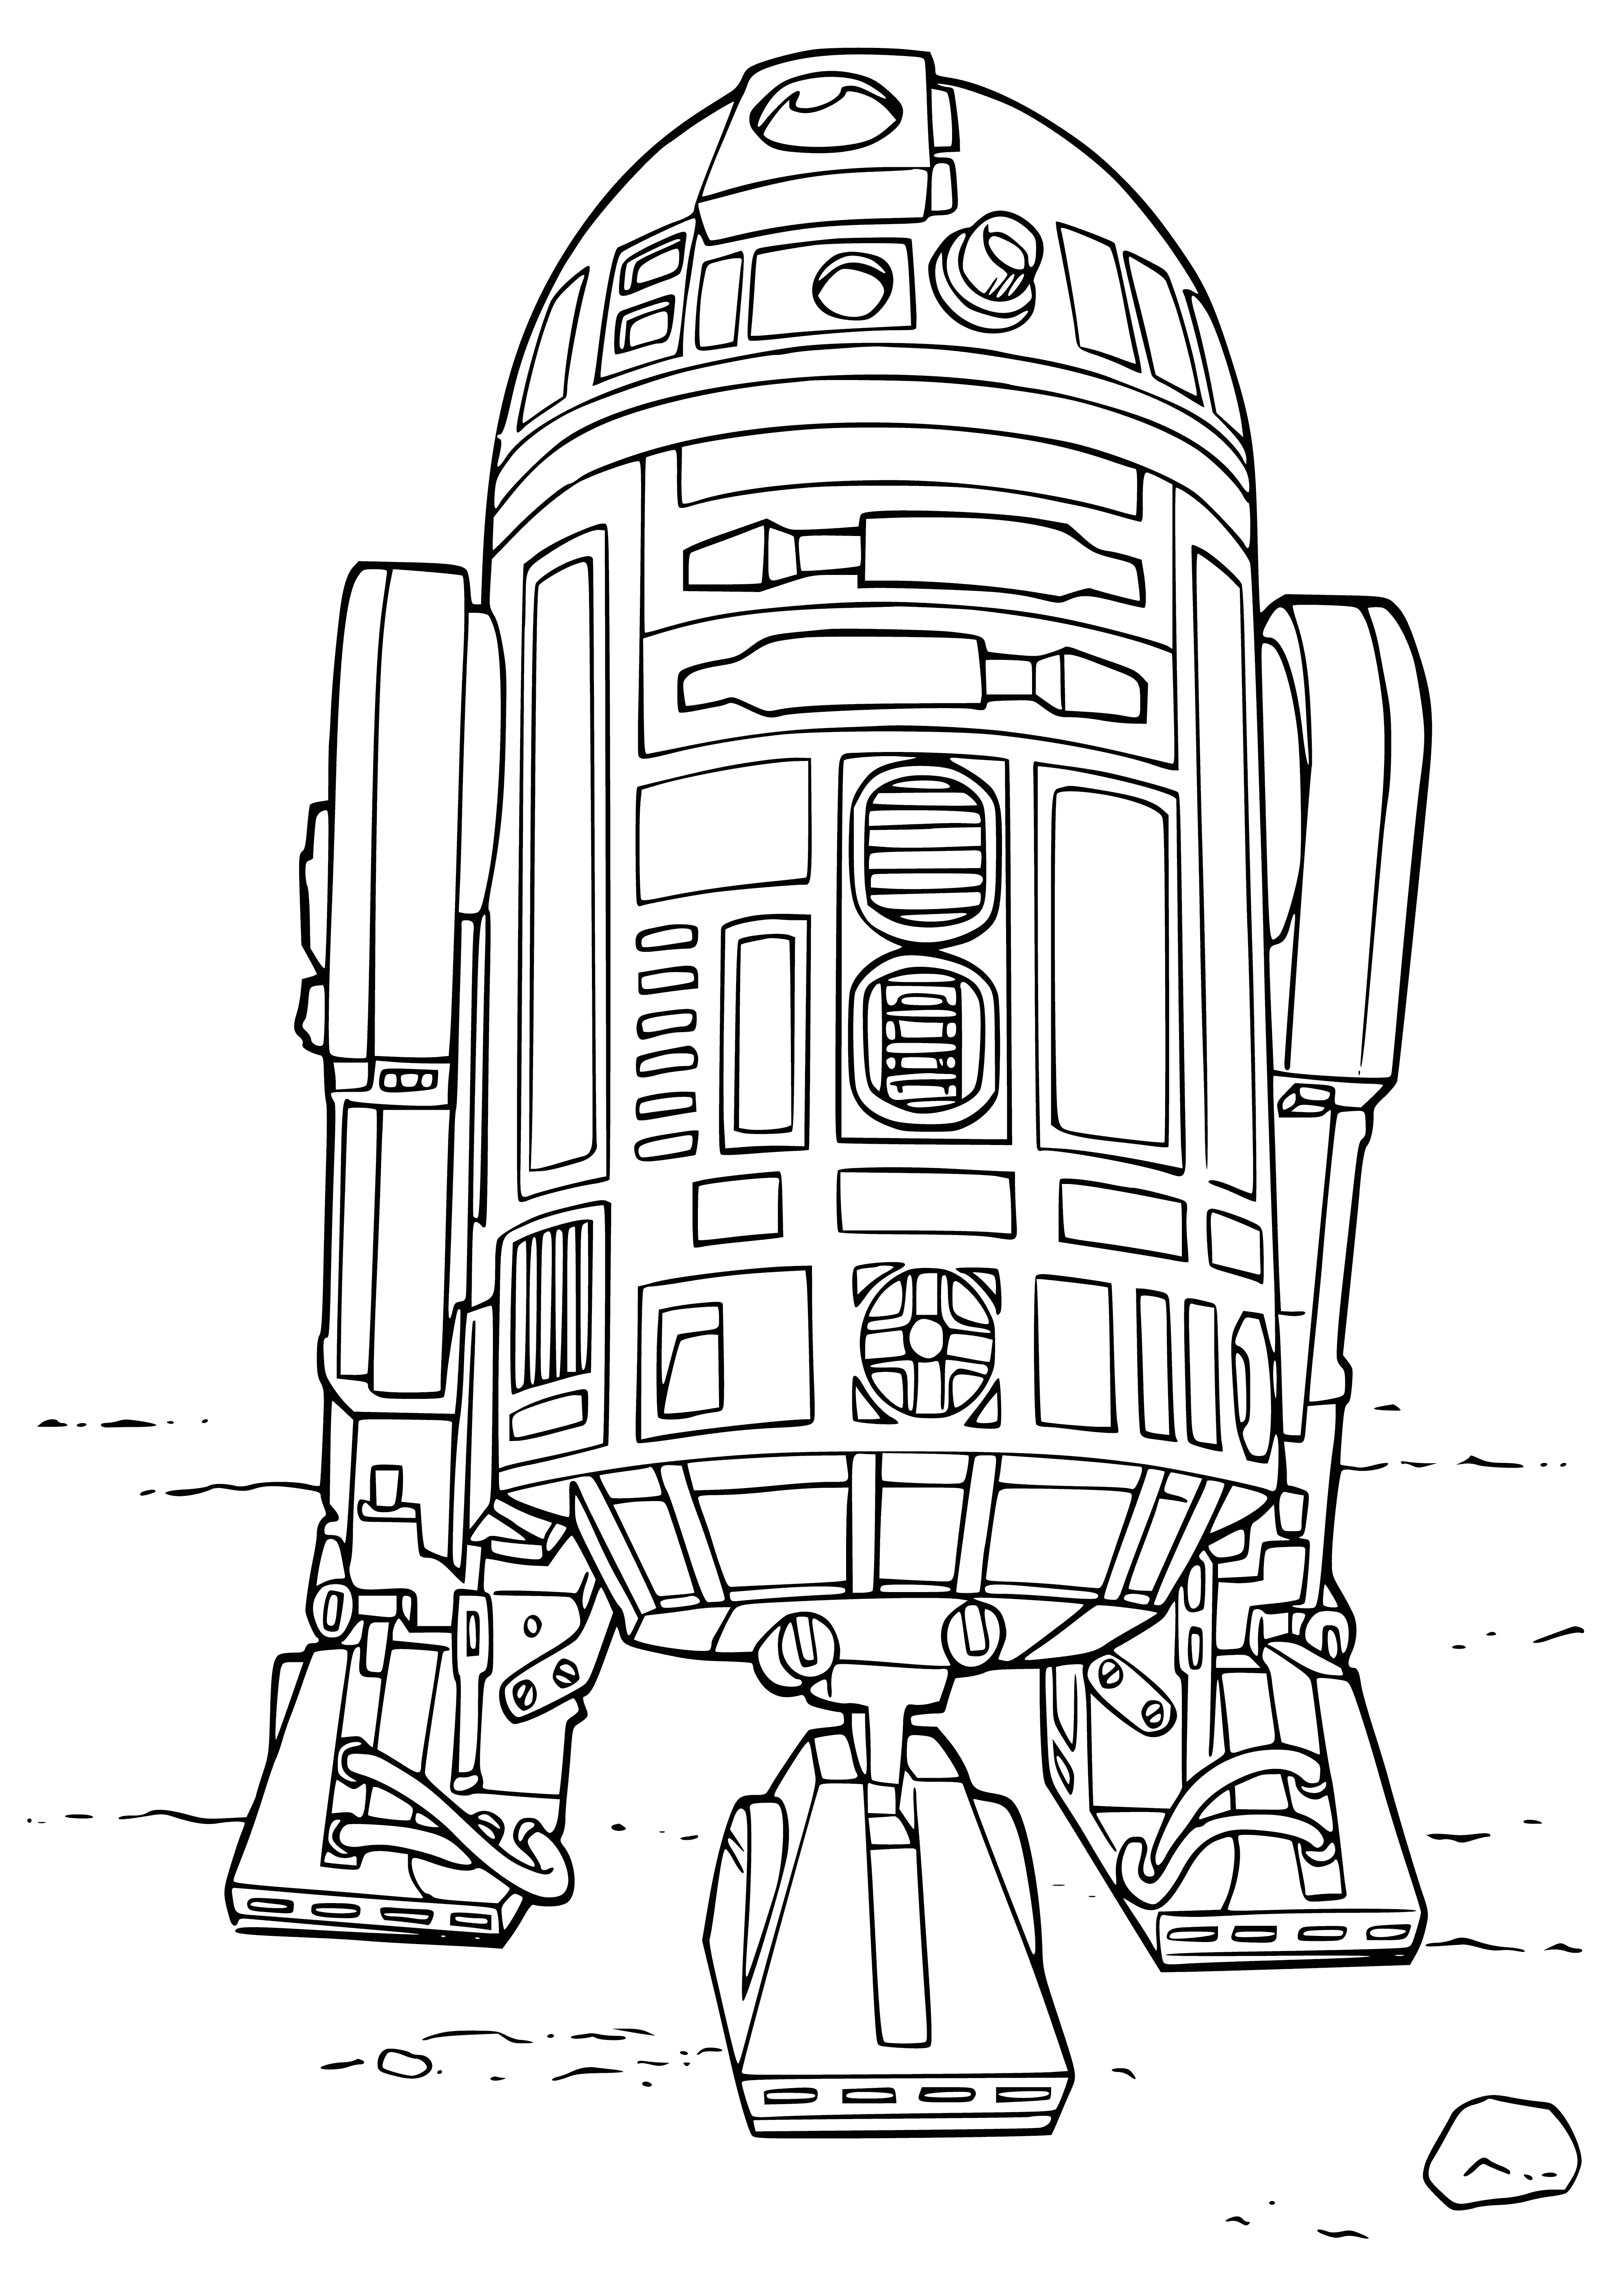 Astrodroid R2-D2 coloring page